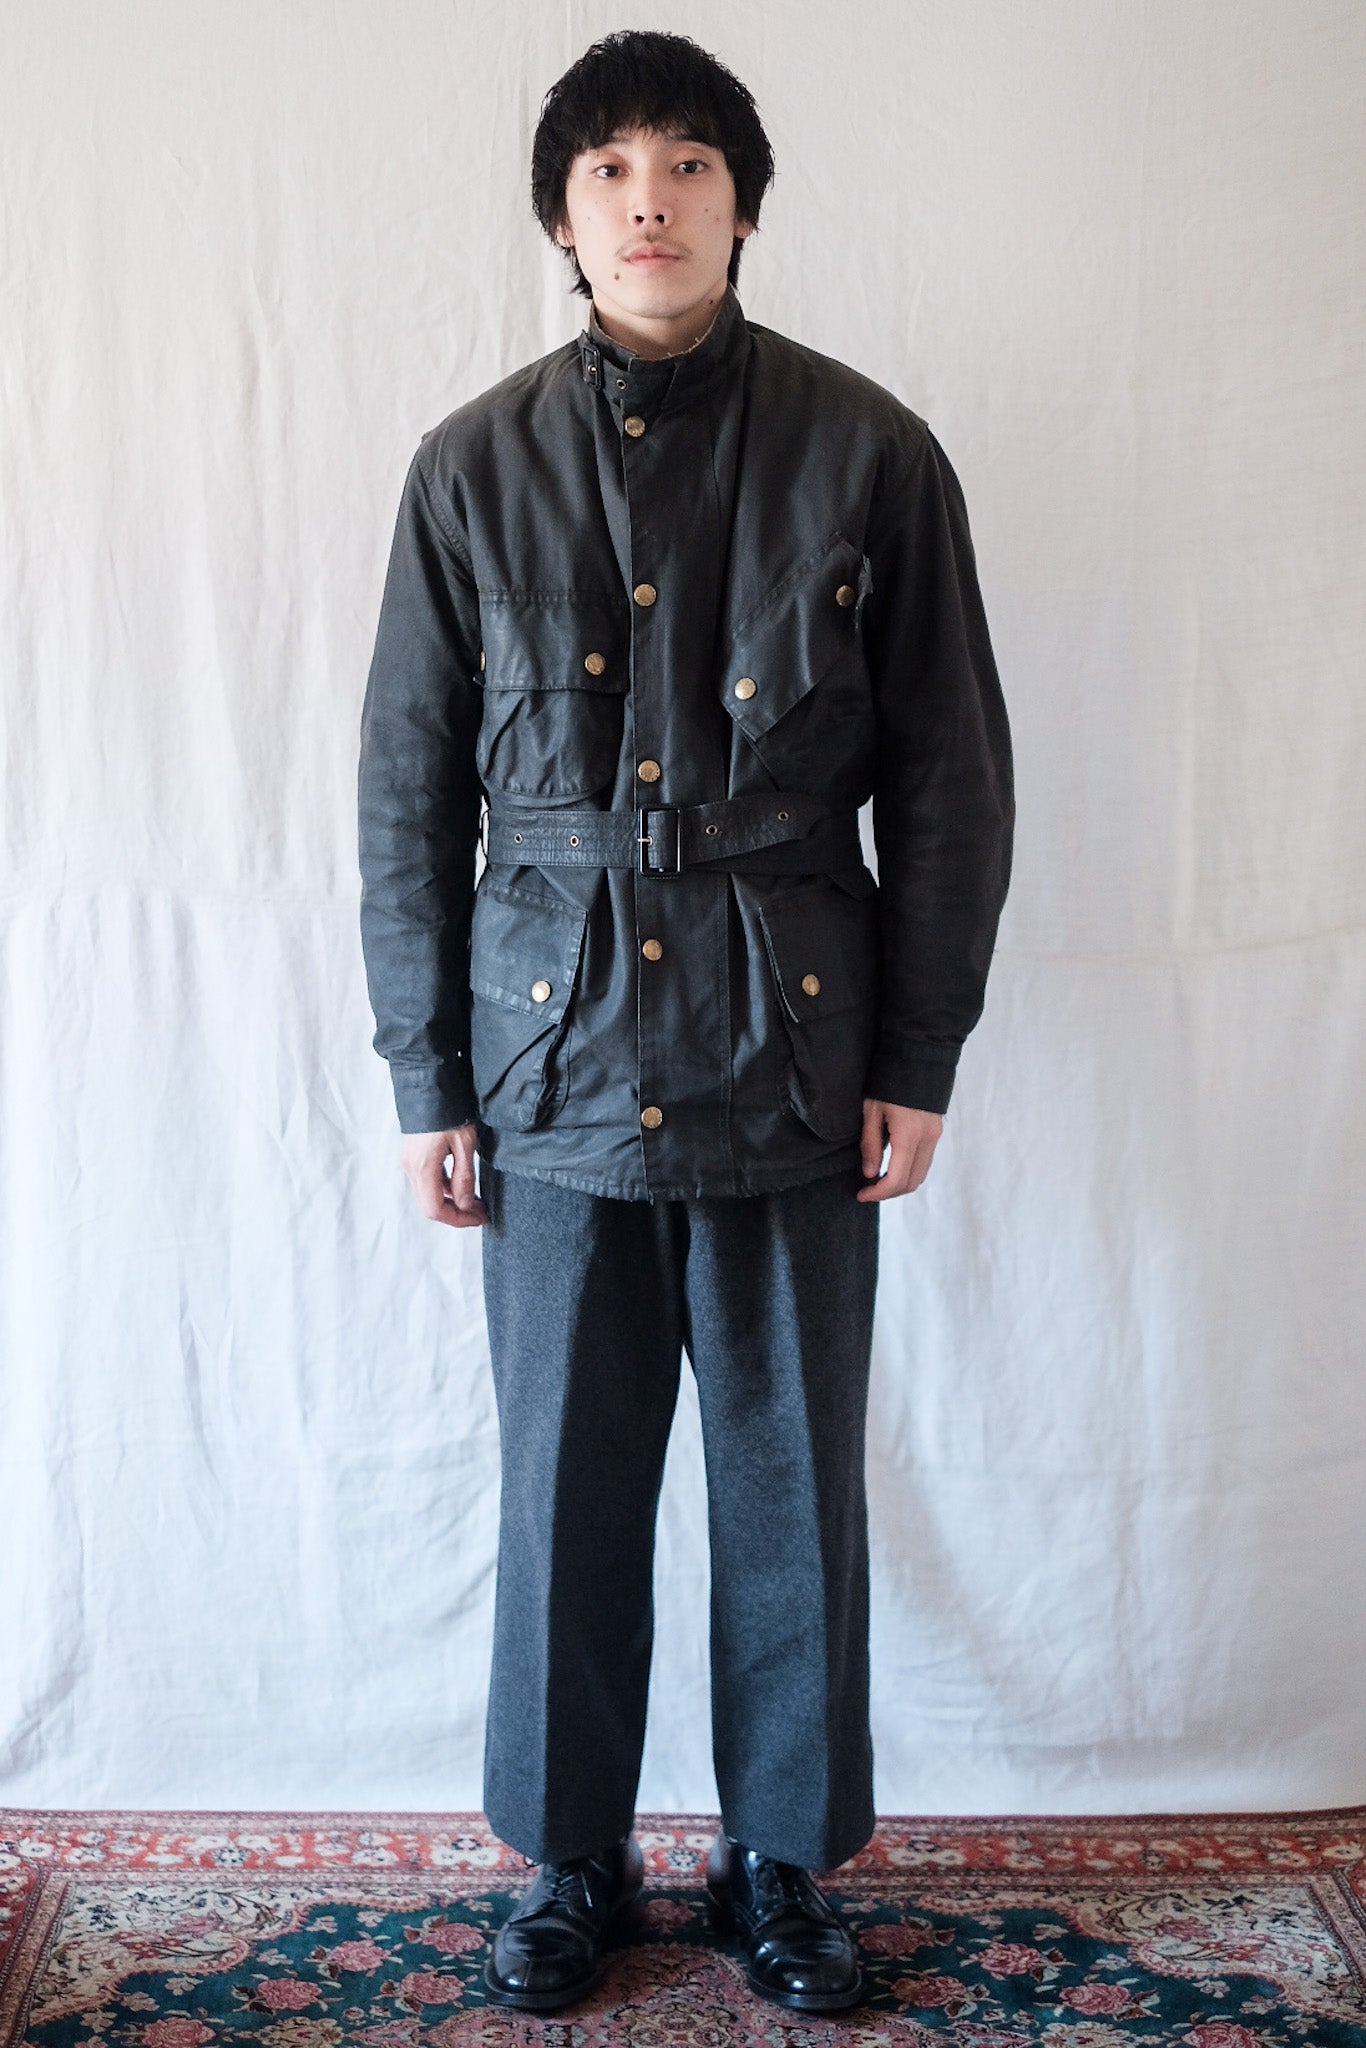 [~ 90's] Vintage Barbour "International Suit NATO MODEL" 3 CREST SIZE.42